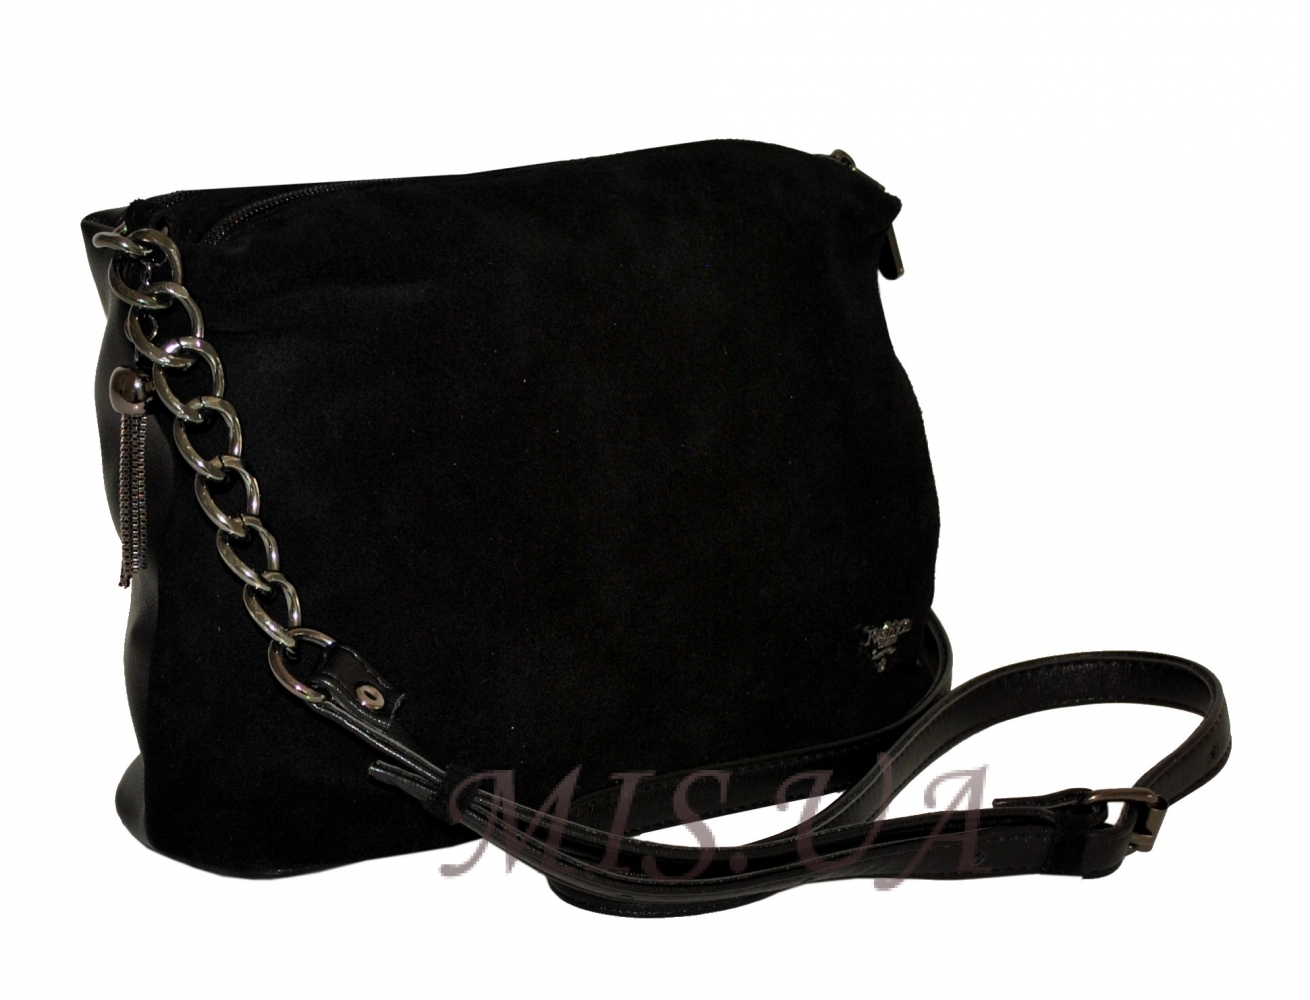 Женская замшевая сумка 0670 черная